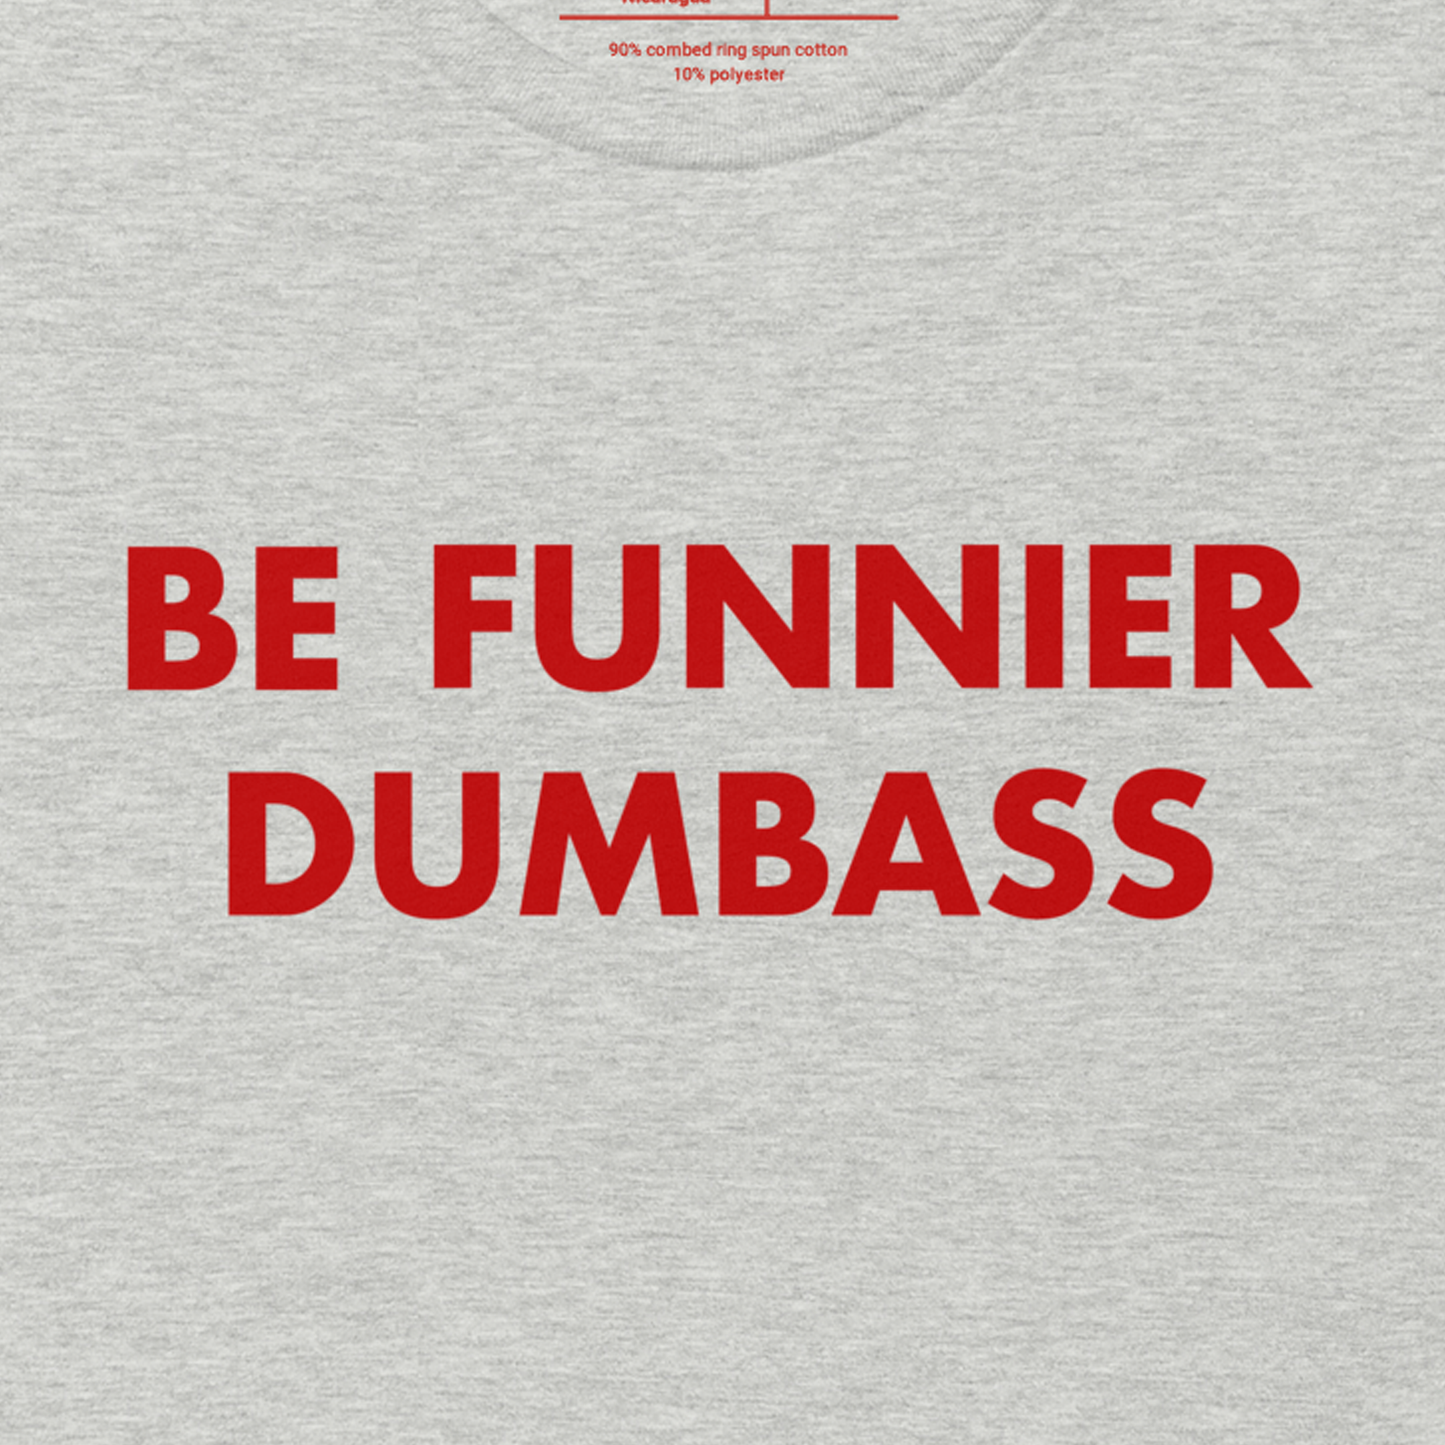 Saturday Night Live Be Funnier Dumbass 22 T-Shirt